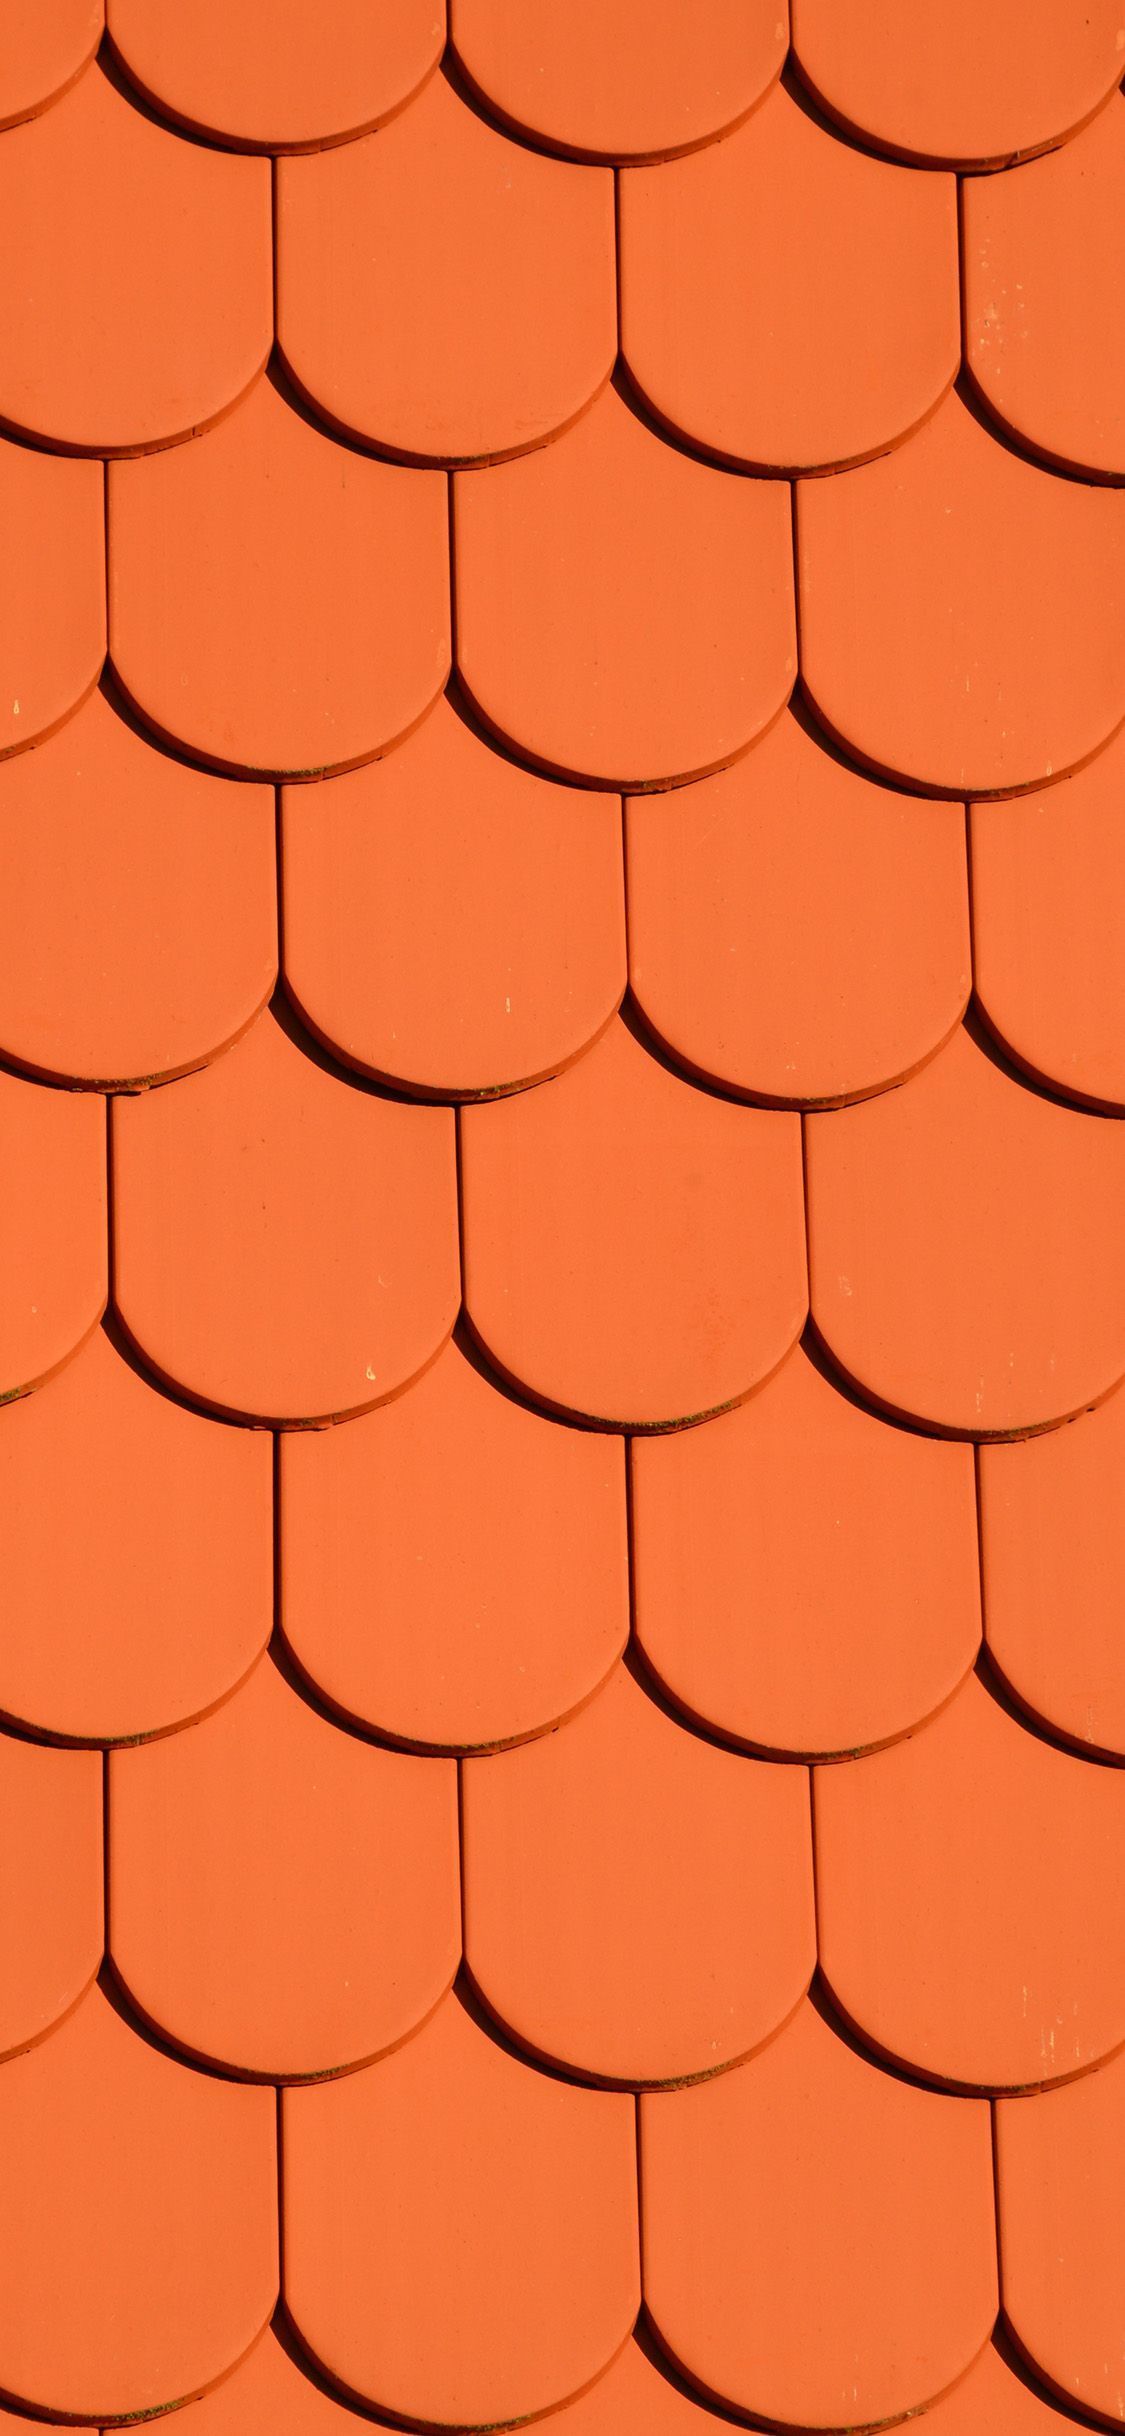 A close up of an orange roof - Orange